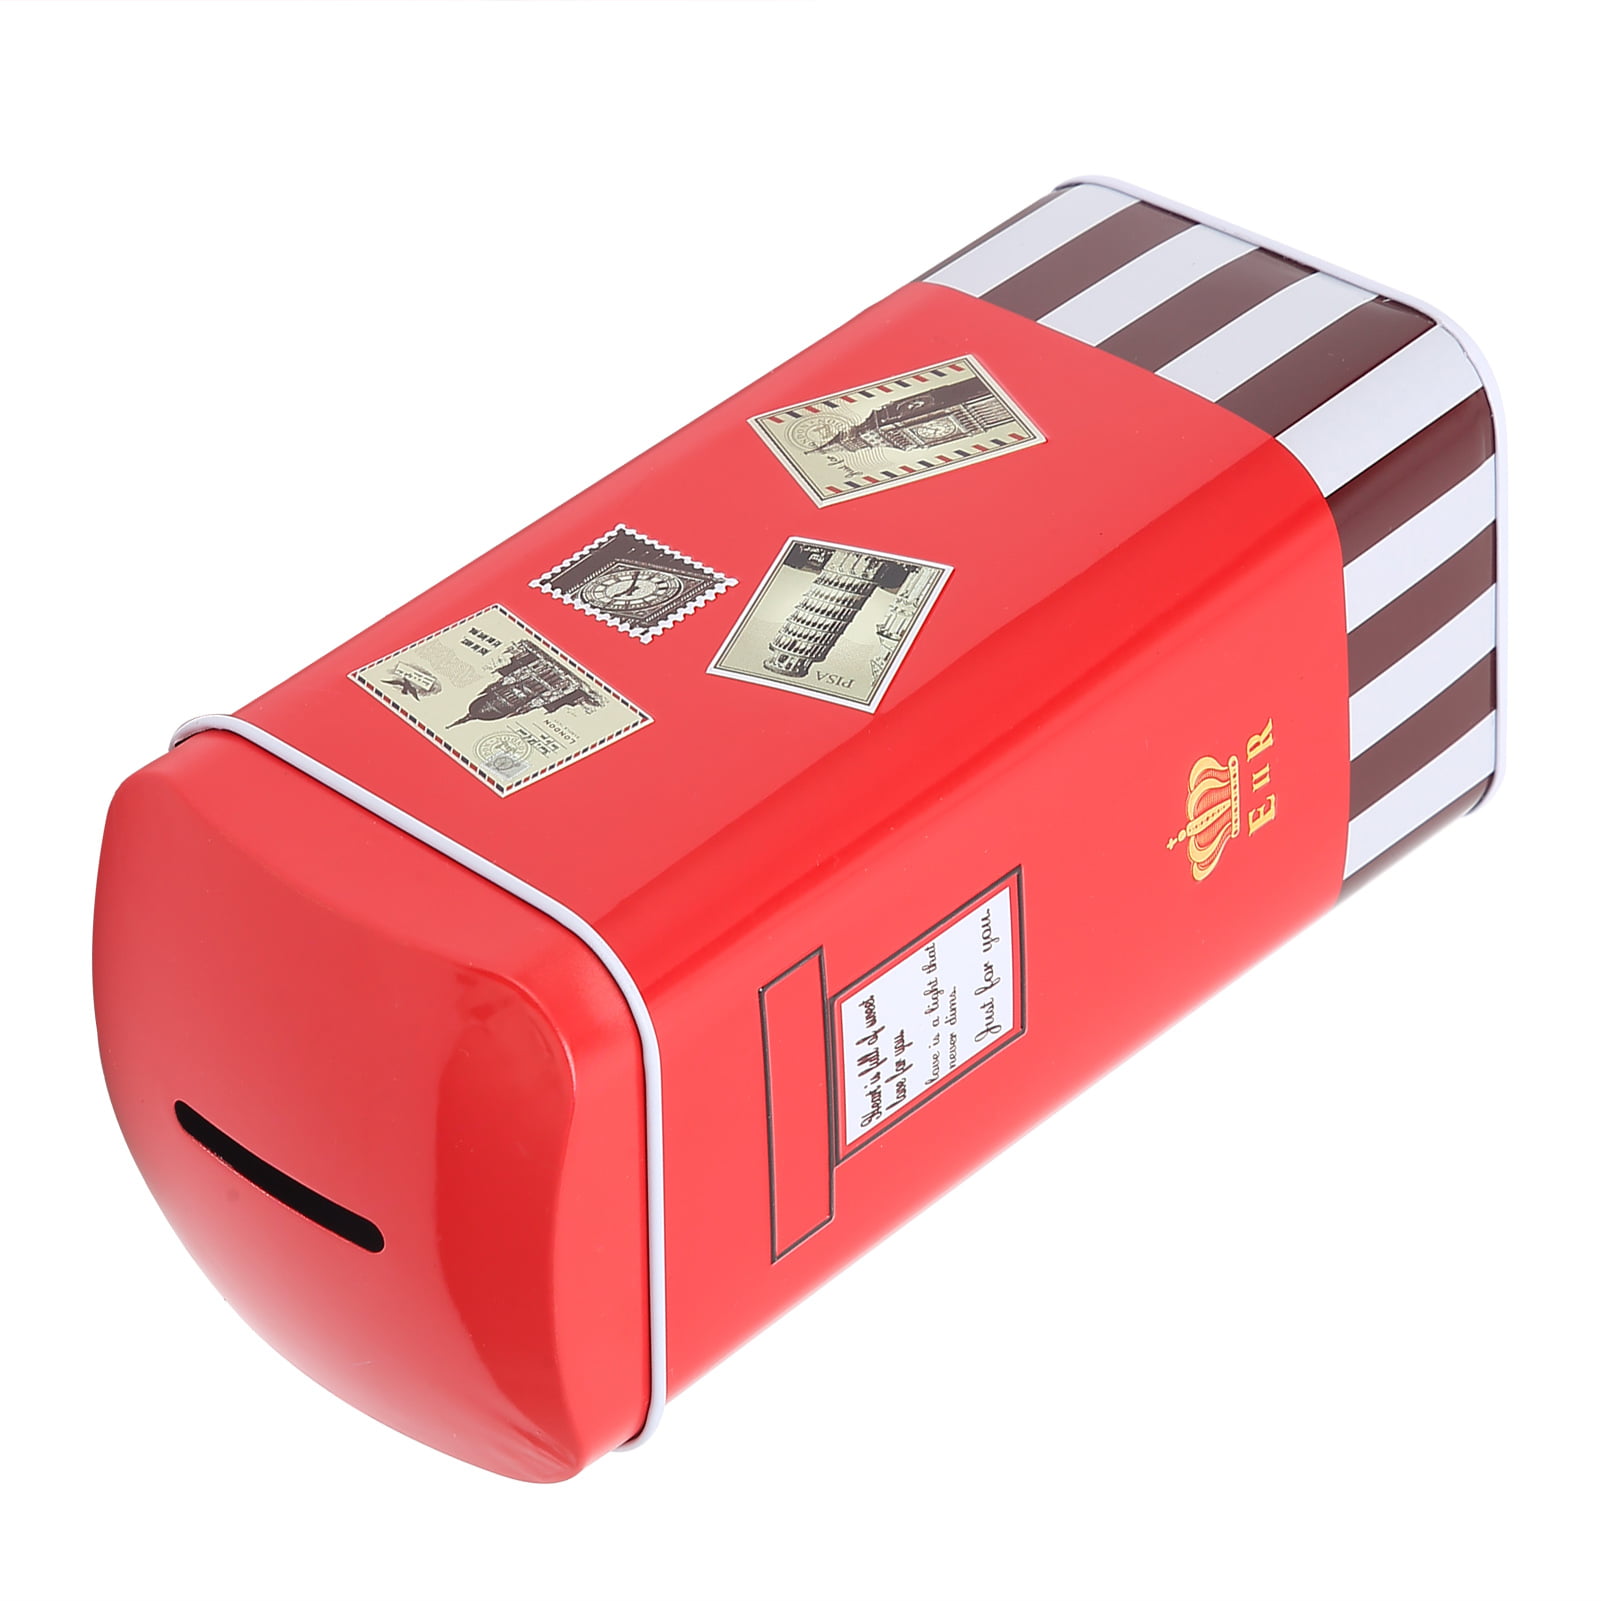 Mailbox Post Box Model Decor State Piggy Bank Money Saving Box Home Desk Decoration Metal Money Bank Alloy Saving Pot Piggy Bank 